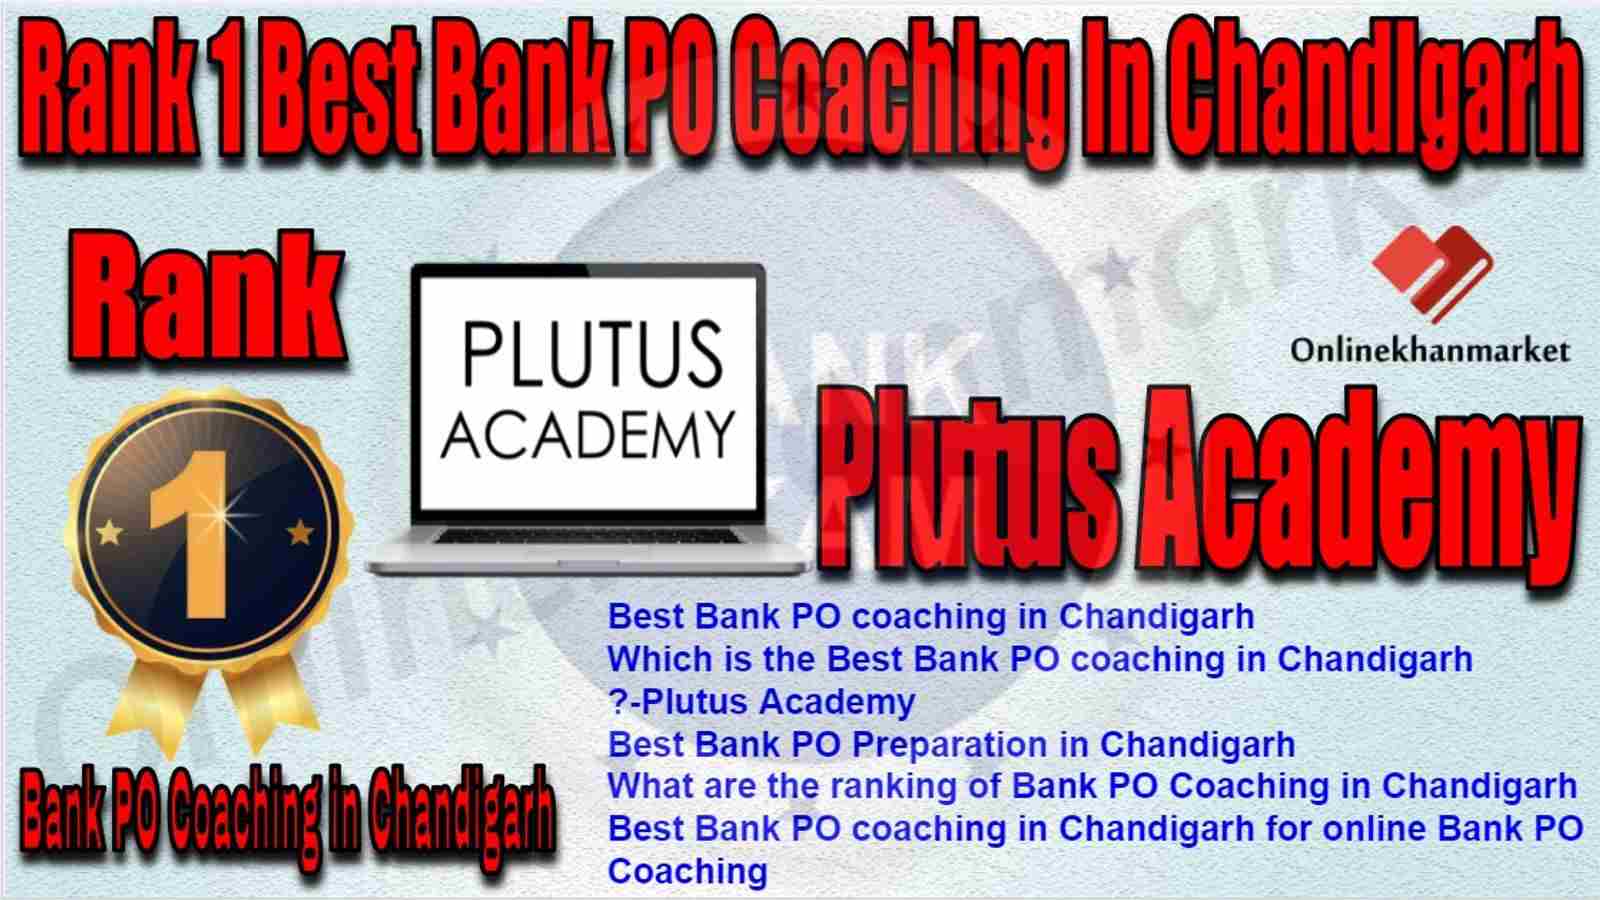 Rank 1 Best Bank PO Coaching in Chandigarh